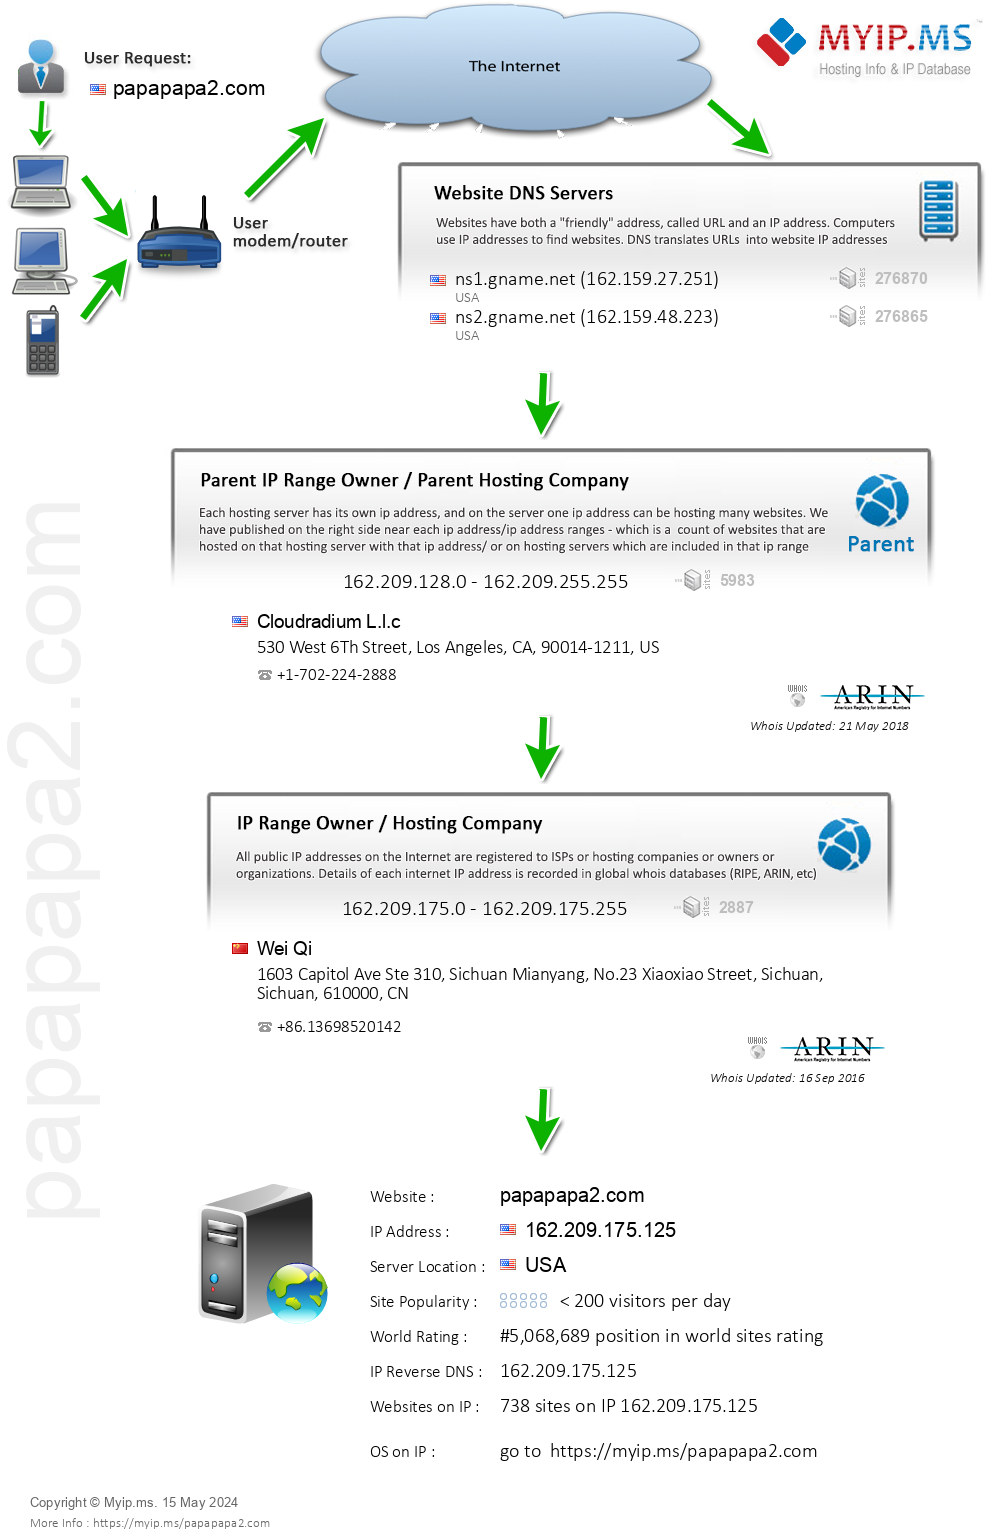 Papapapa2.com - Website Hosting Visual IP Diagram